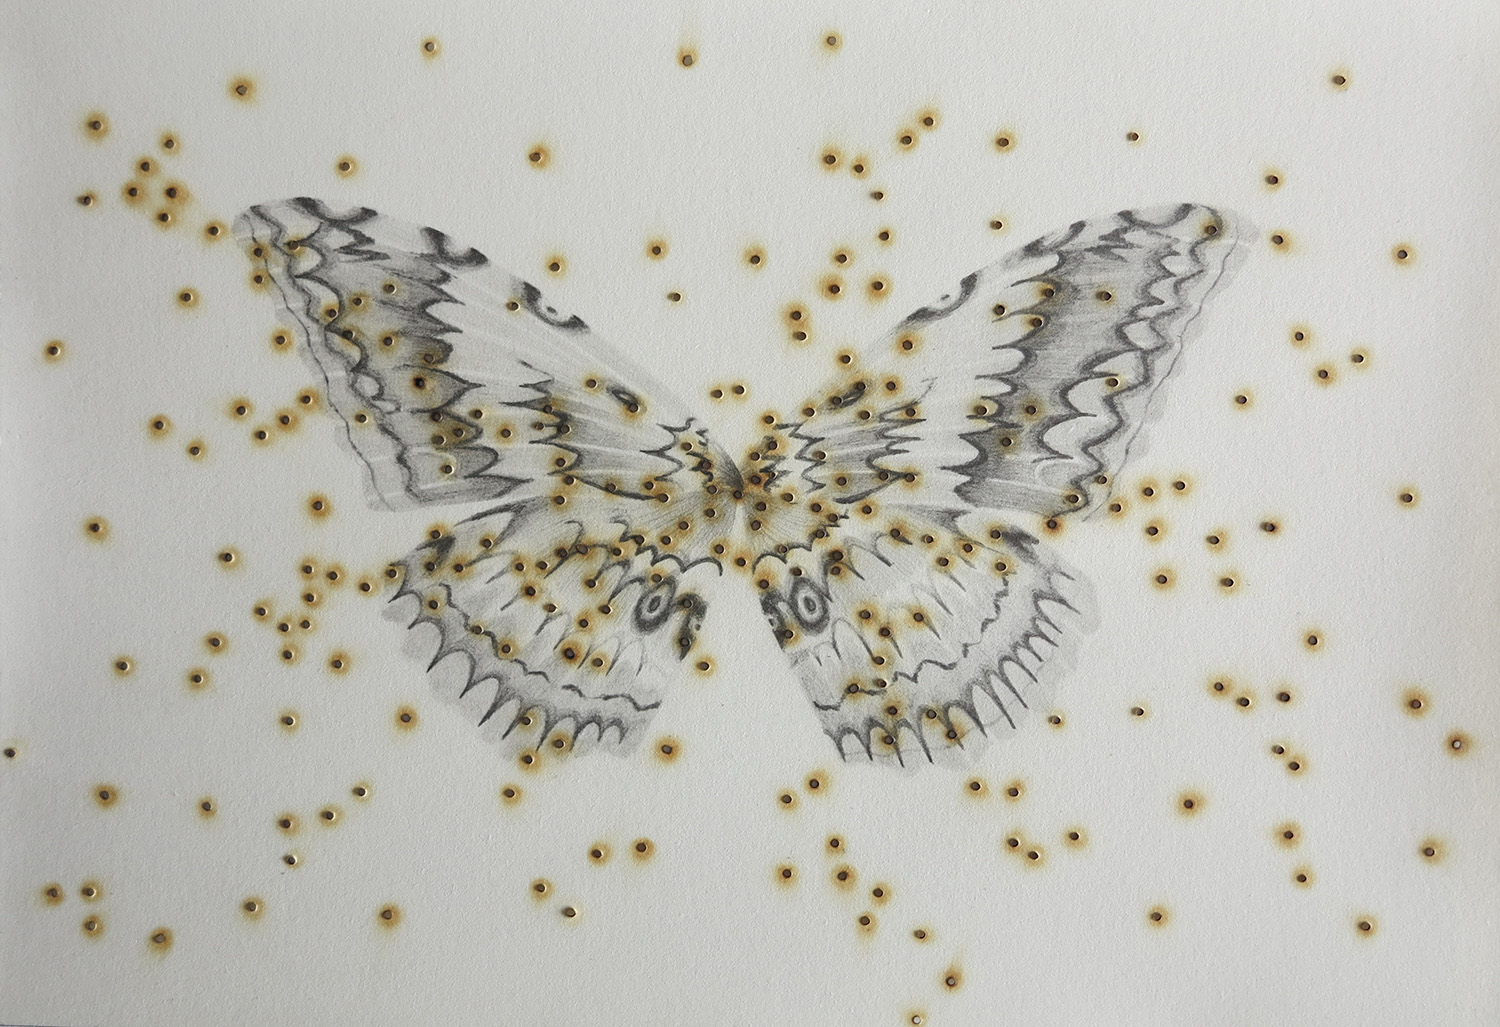 Marielle Degioanni, Attaquer le soleil III, 2019. Perforation, burn and pencil on paper, 18X26cm.